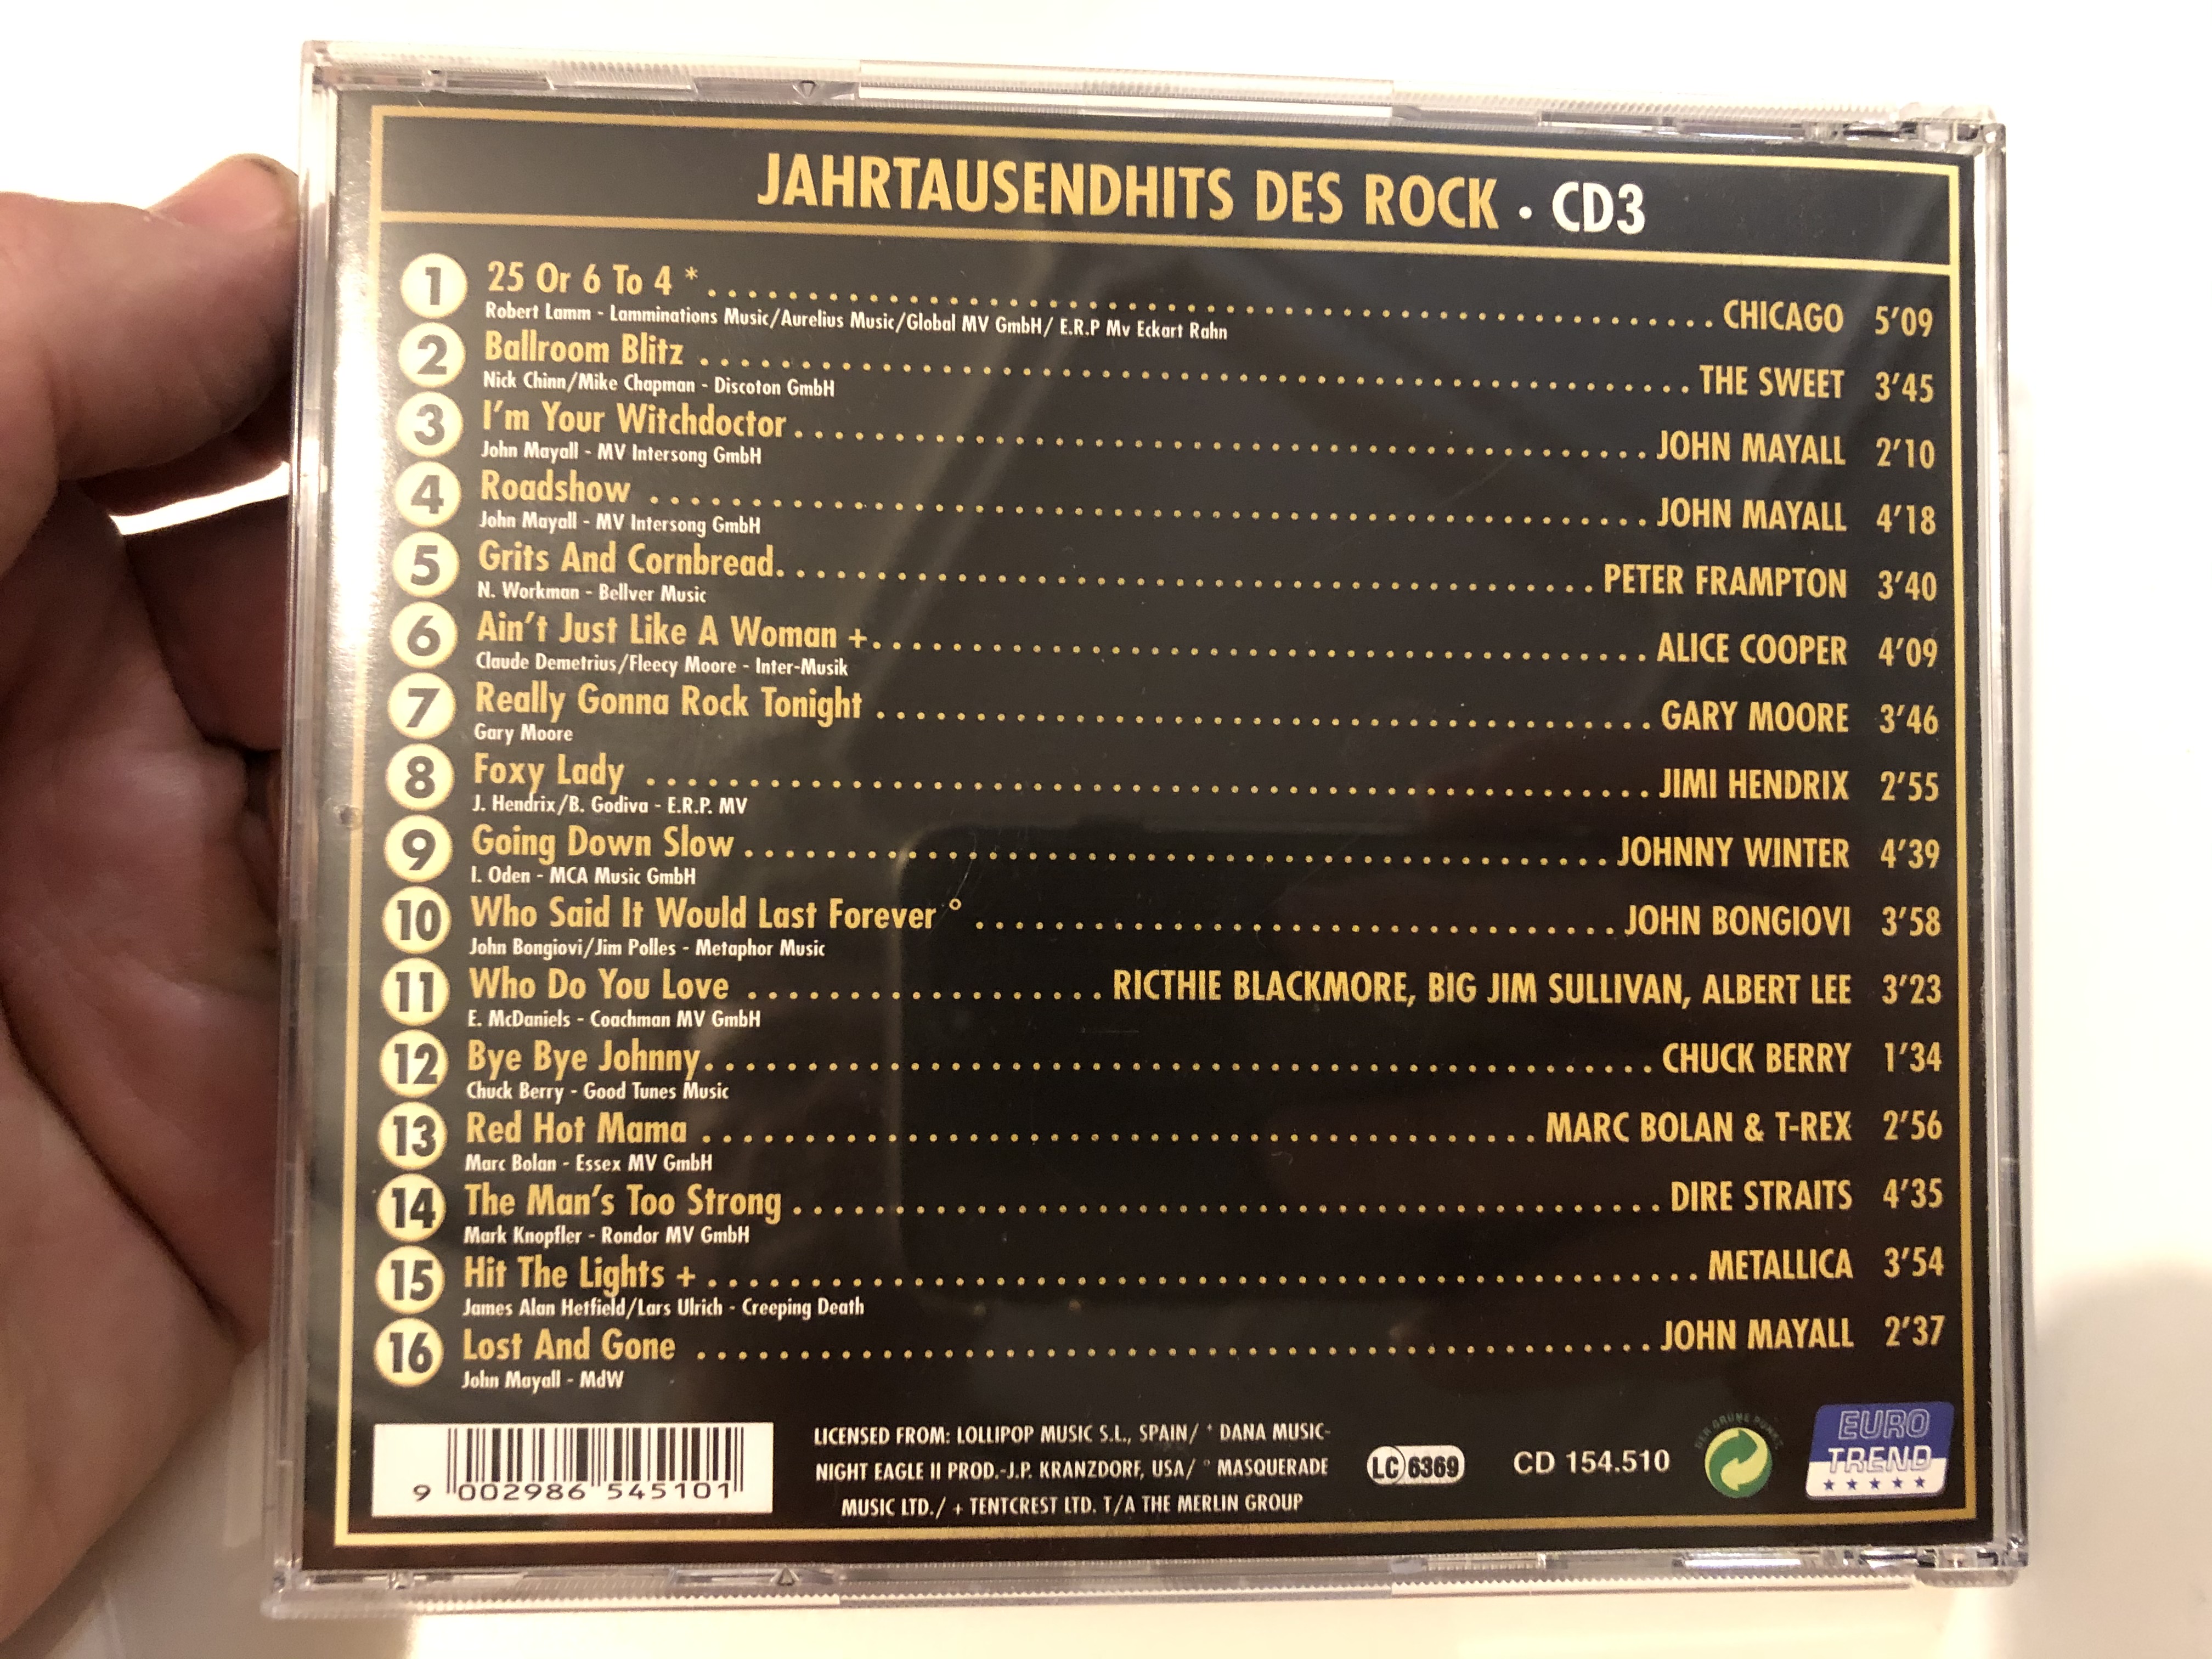 jahrtausendhits-des-rock-3-ballroom-blitz-ain-t-just-like-a-woman-foxy-lady-the-man-s-too-strong-eurotrend-audio-cd-cd-154-2-.jpg